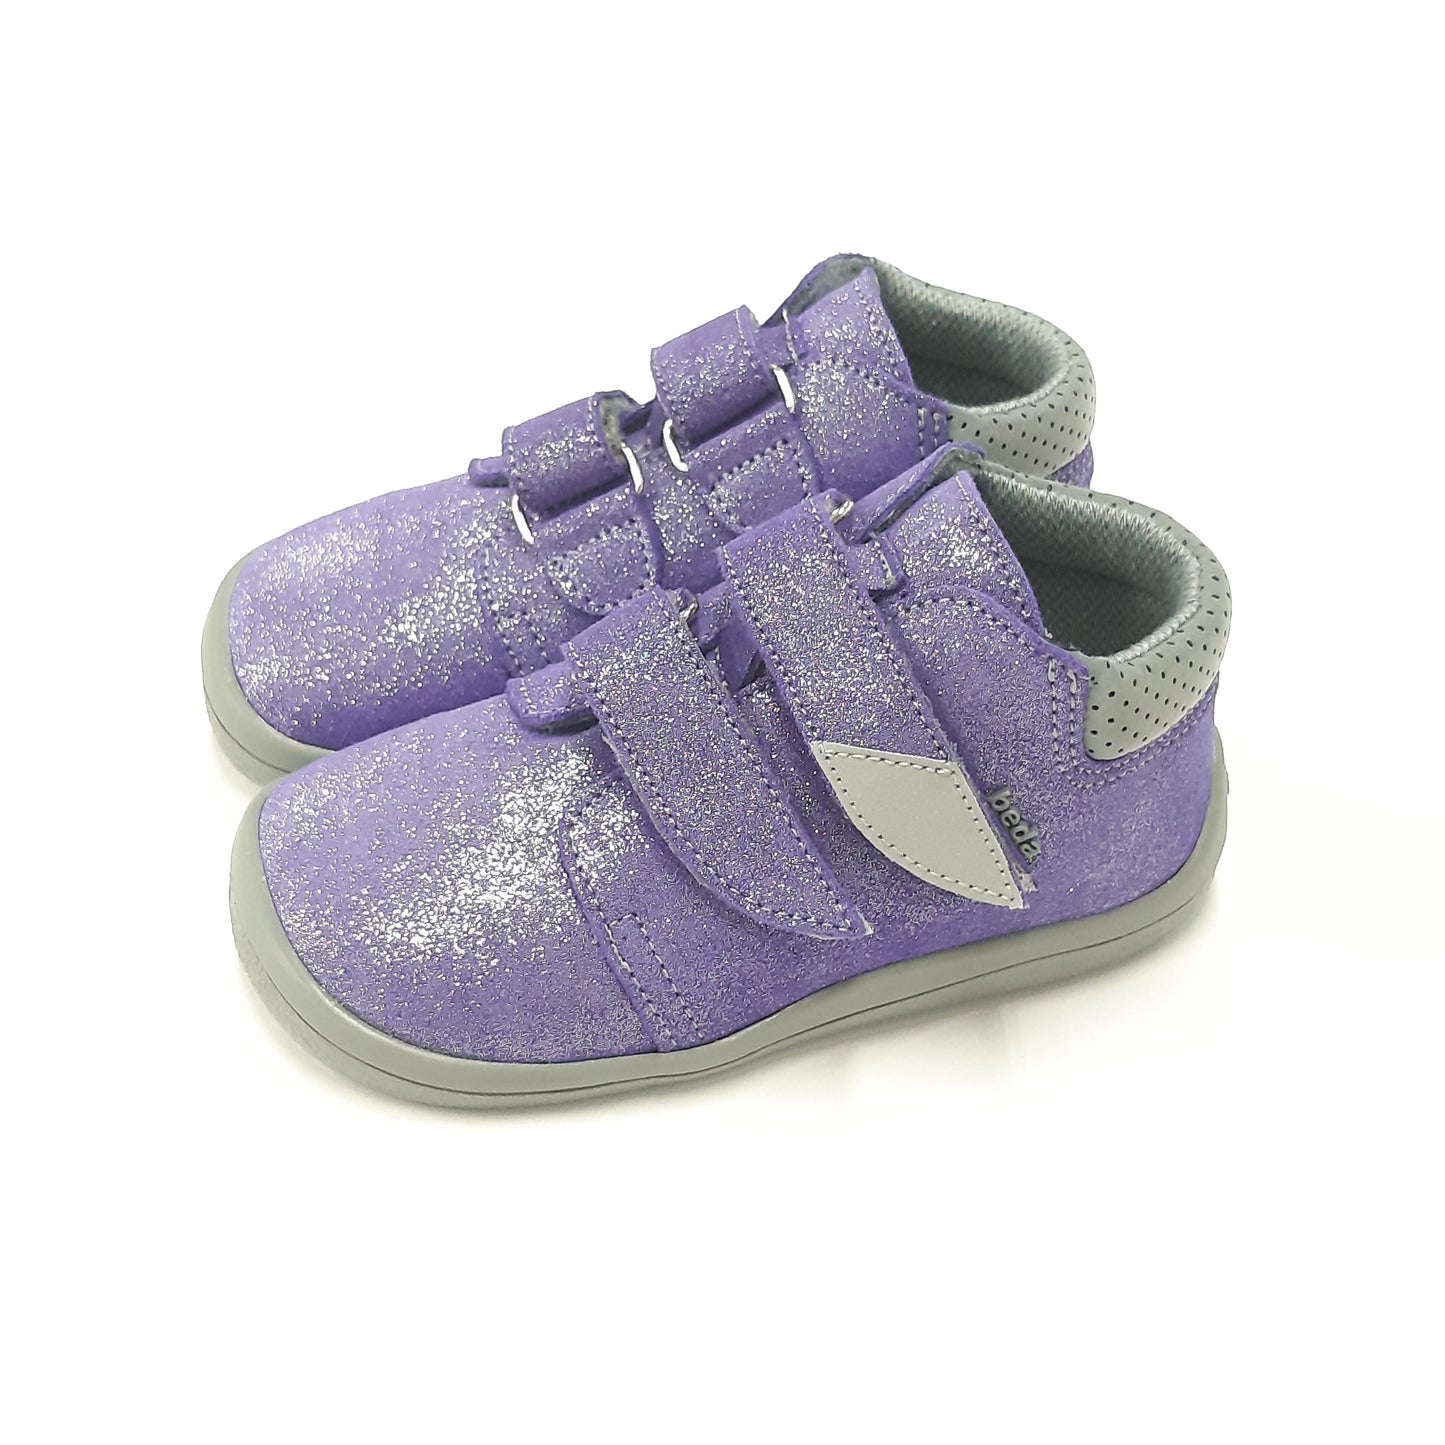 Beda Barefoot TEX mid-season shoes, Violette 23, 24